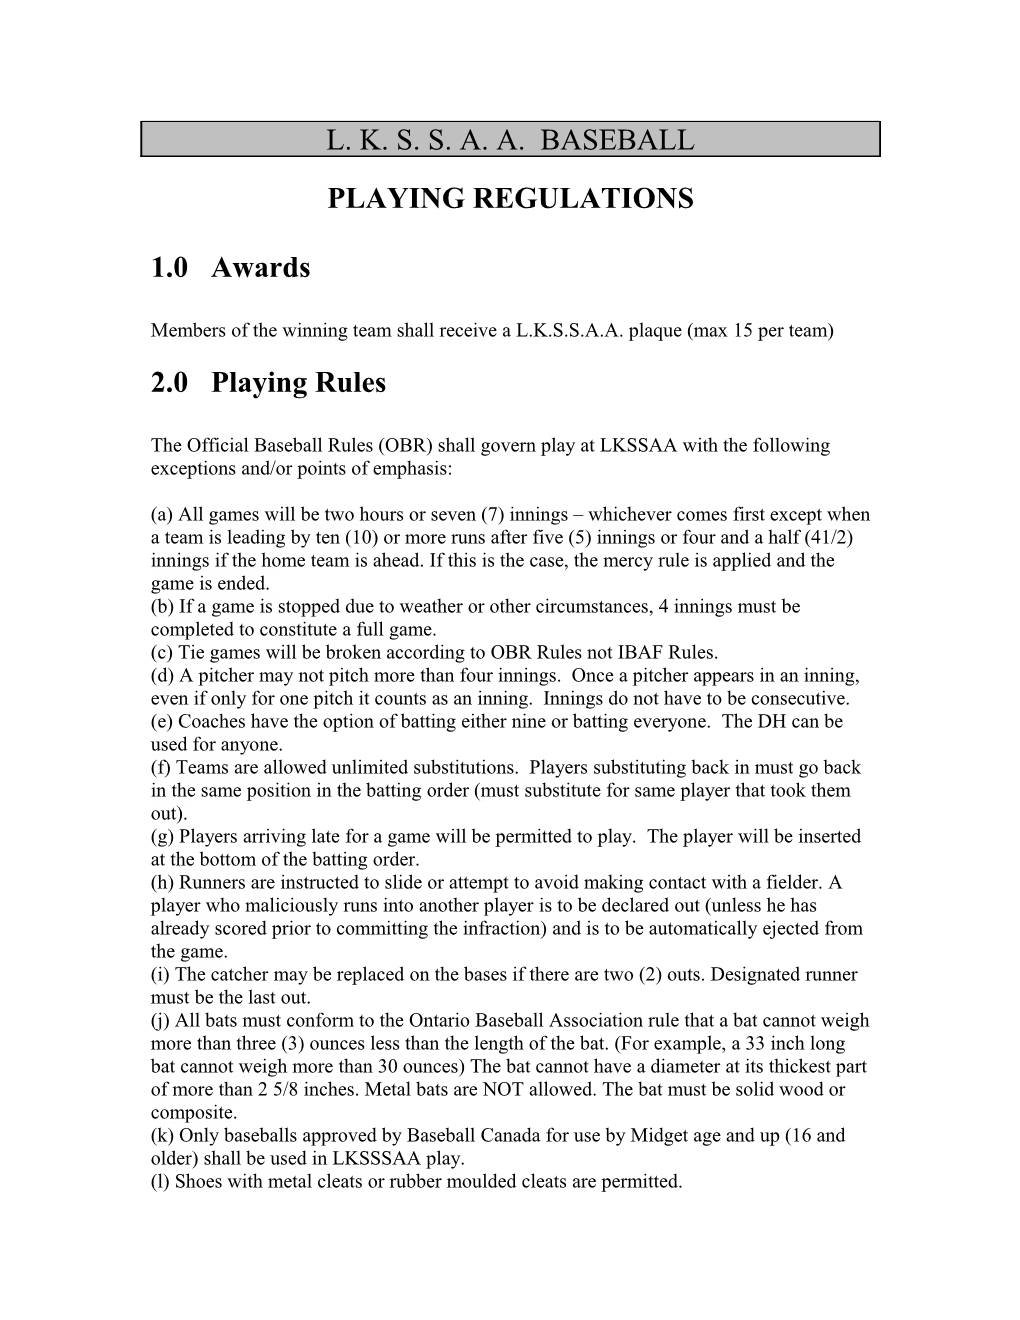 Playing Regulations